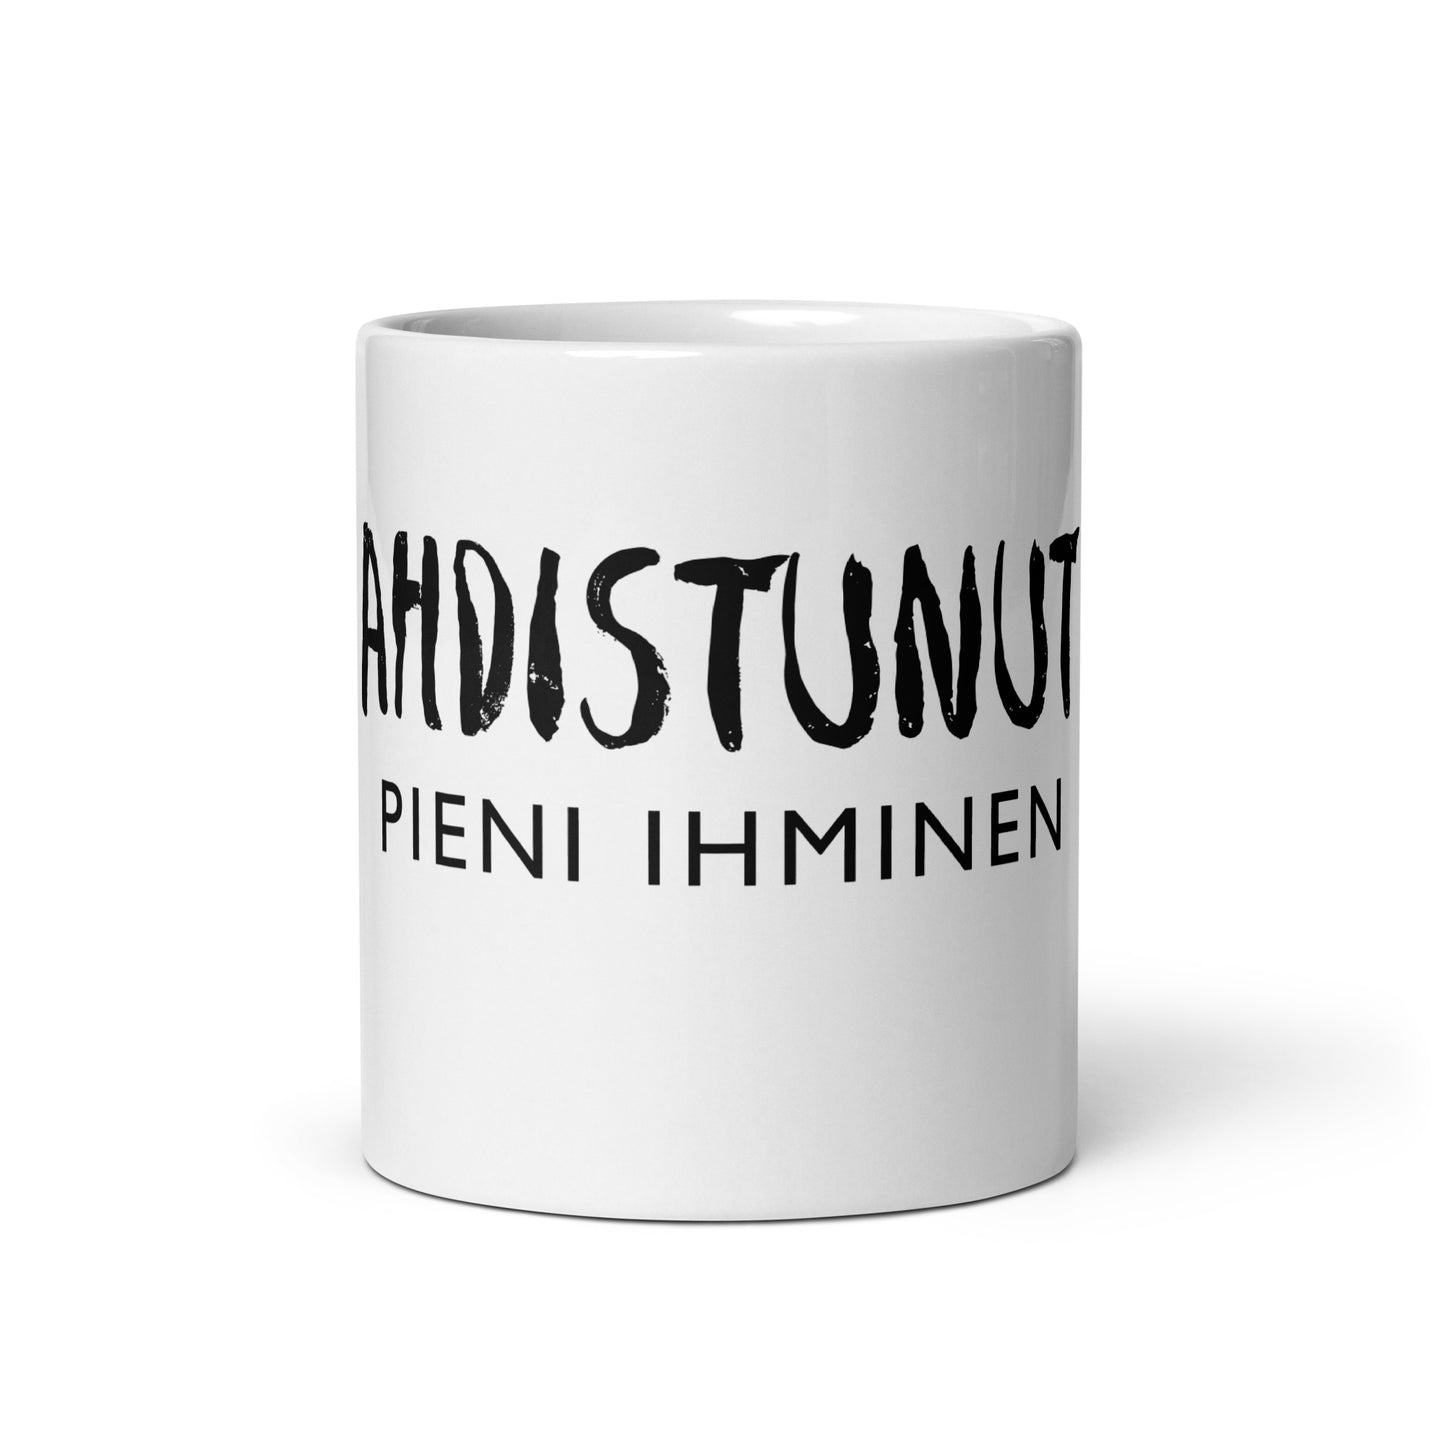 "Distressed" Ceramic Mug